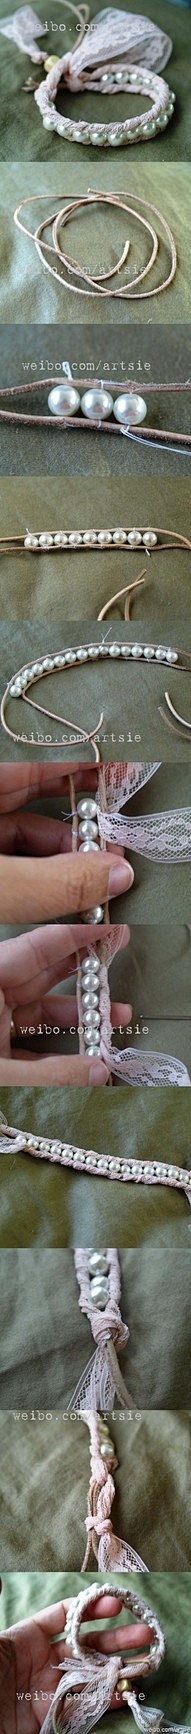 珠串手链